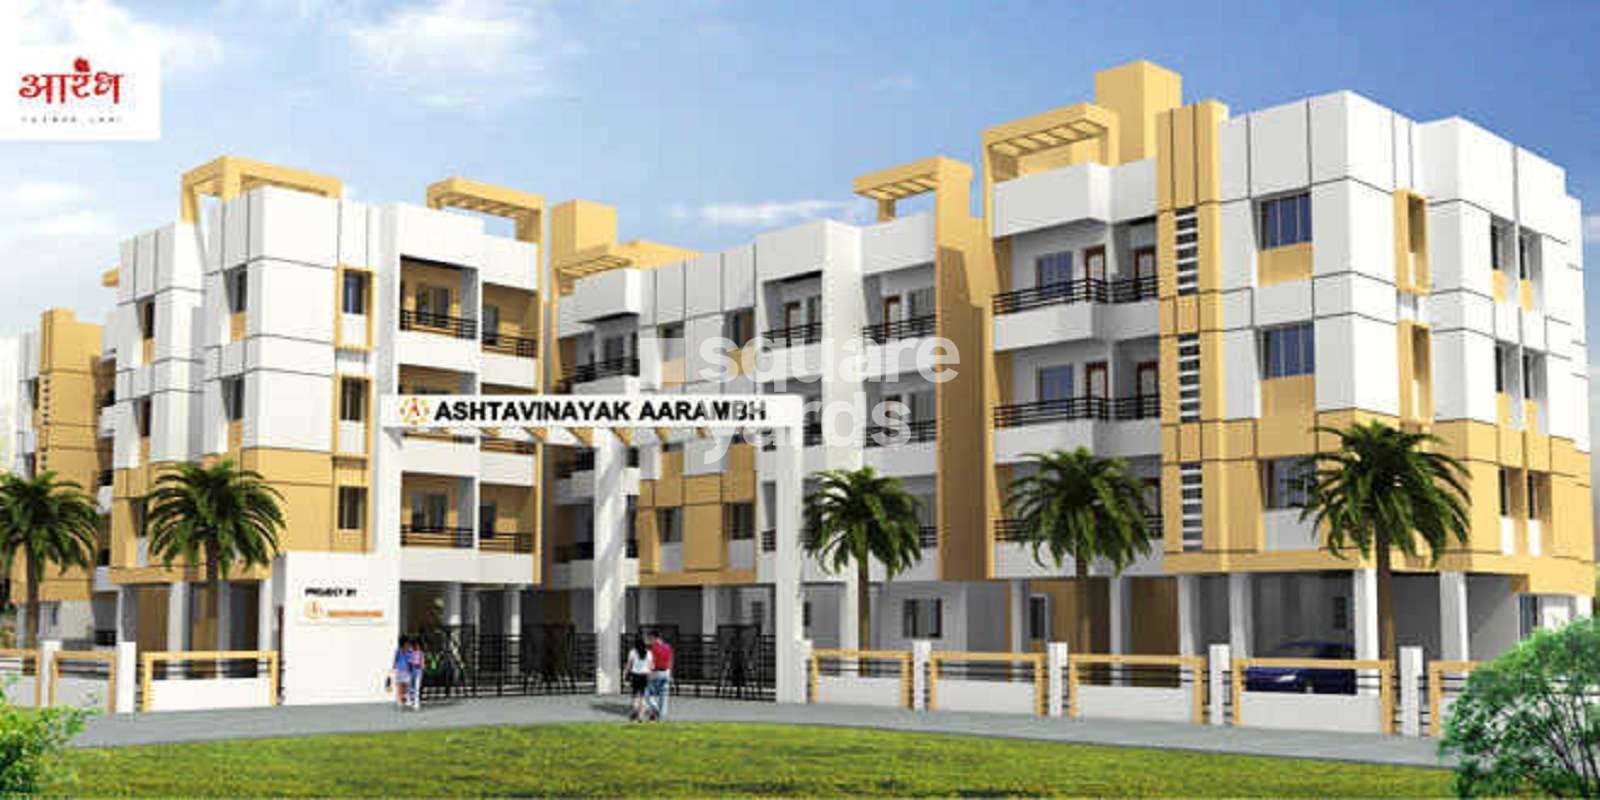 Ashtavinayak Aarambh Apartment Cover Image